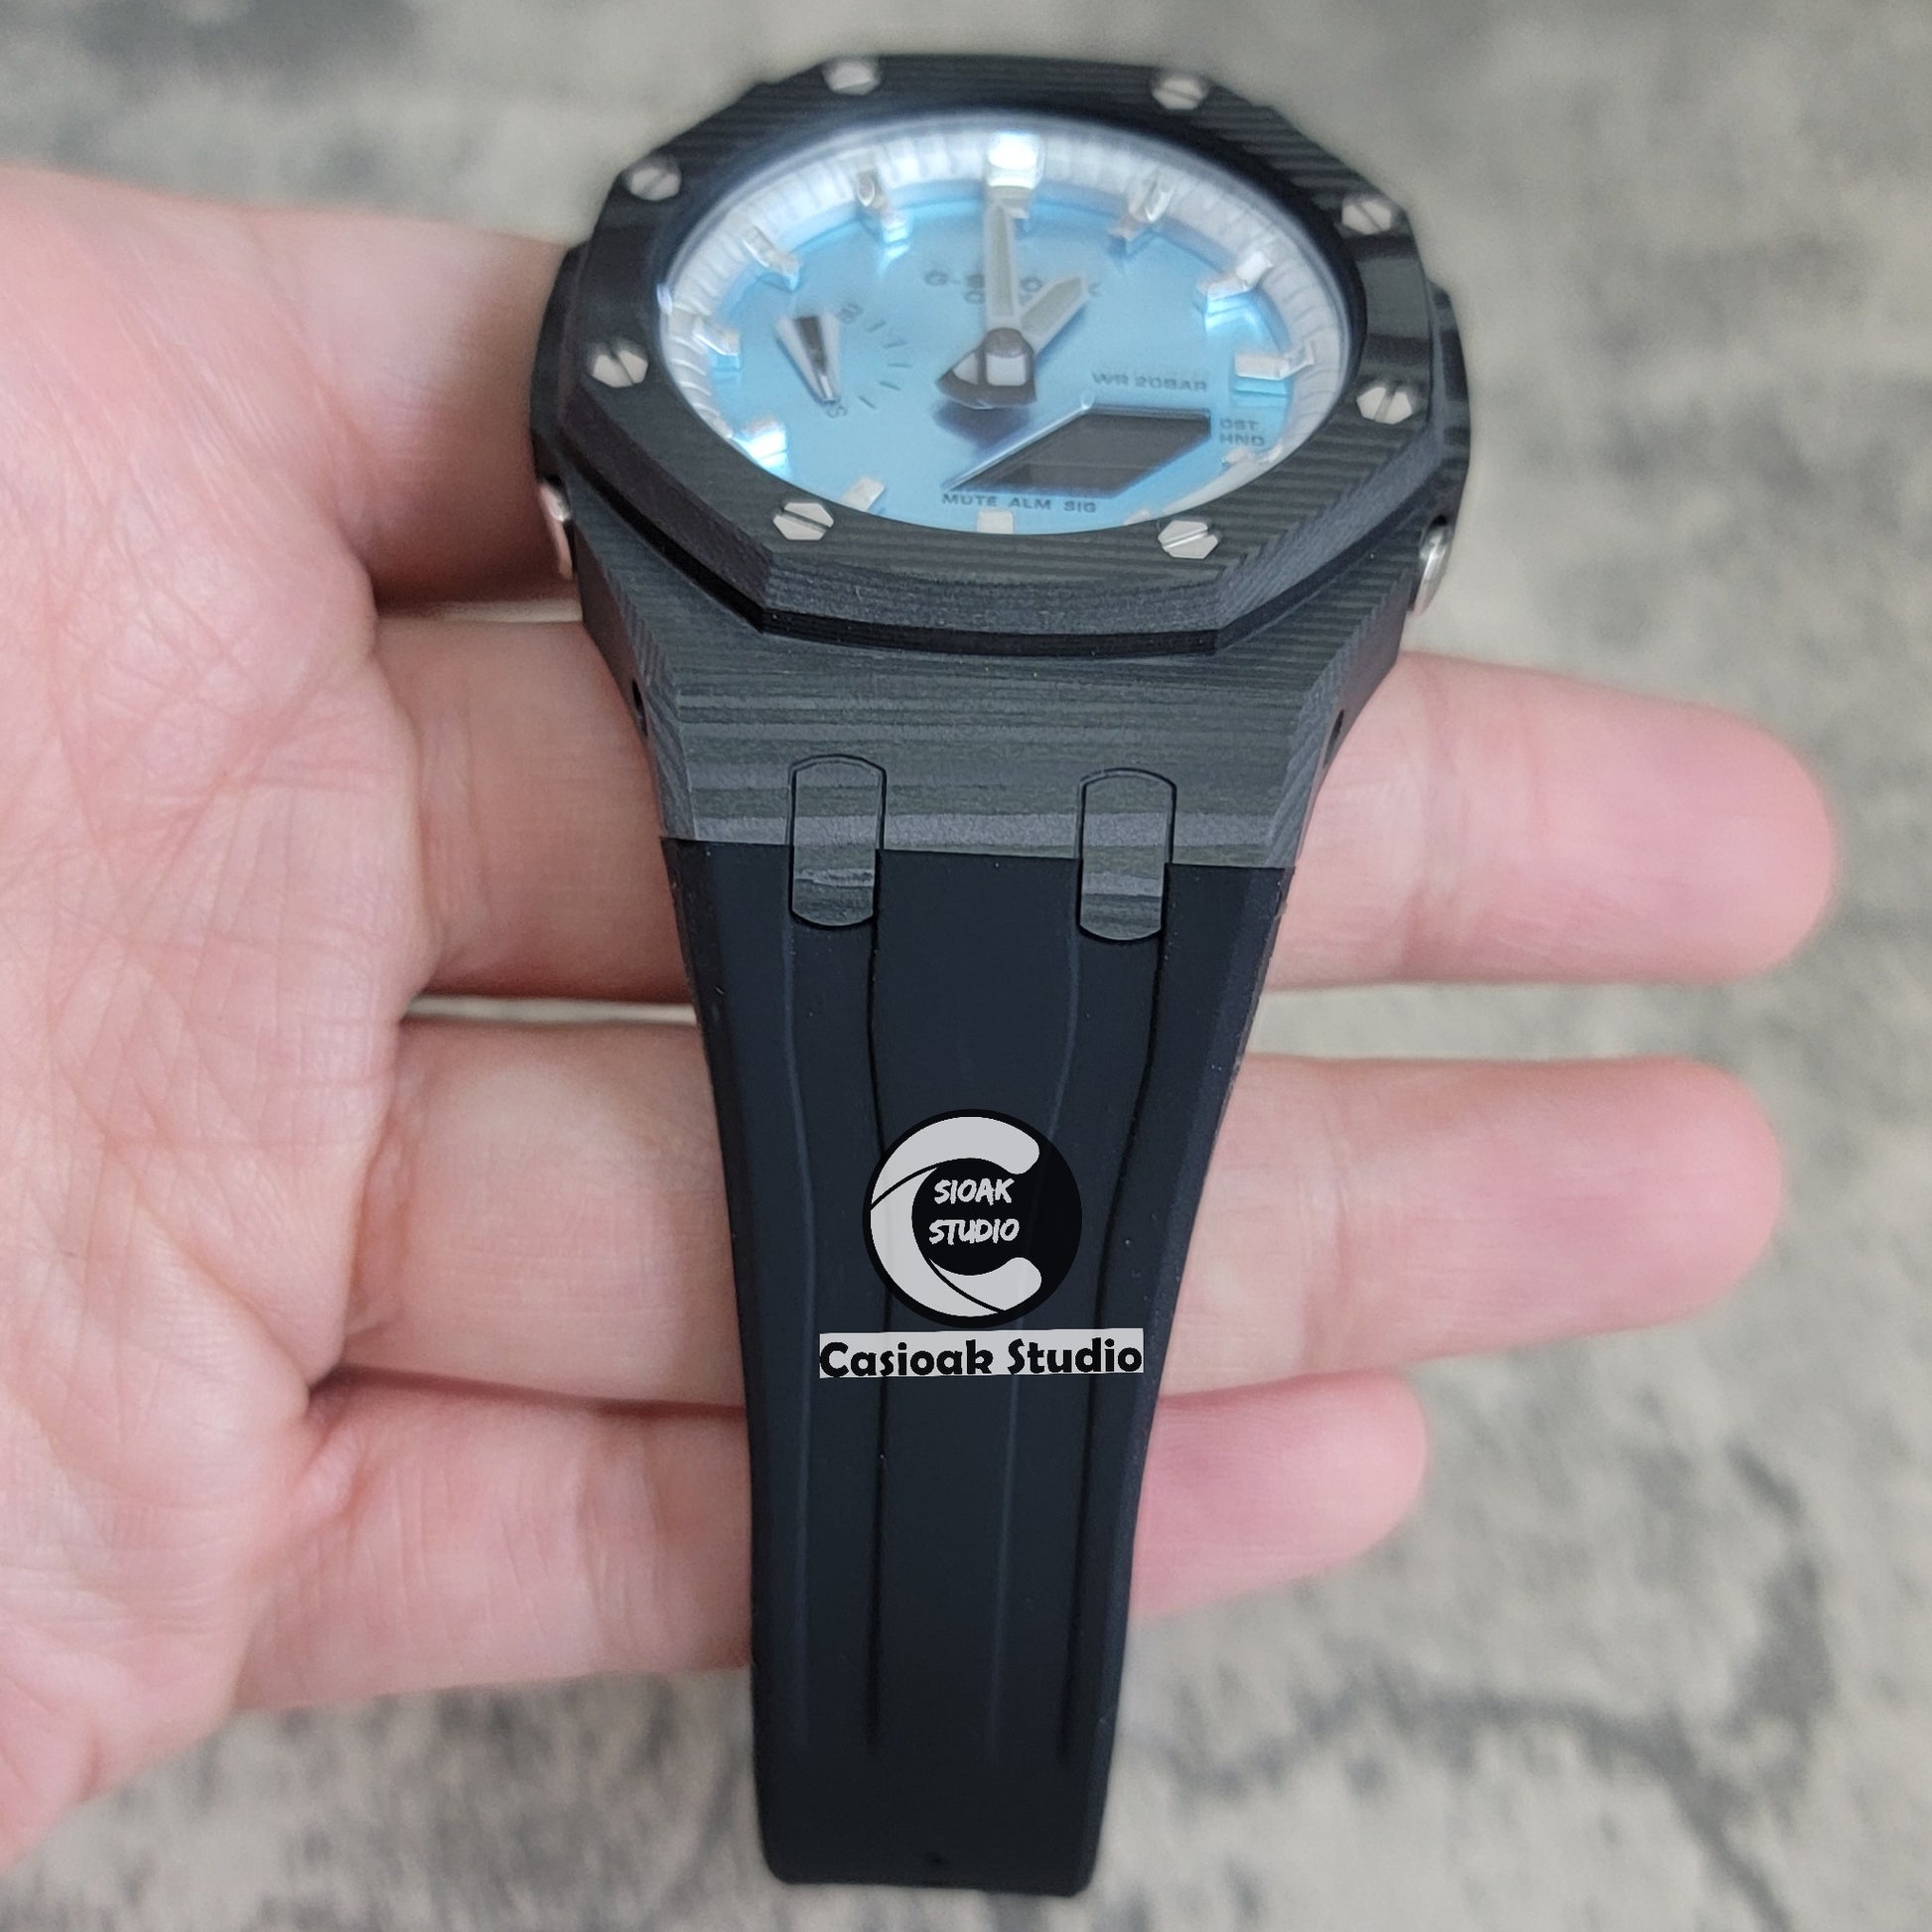 Casioak Mod Watch Carbon Fiber Black Case Black Strap Silver Time Mark Bllue Dial 44mm - Casioak Studio